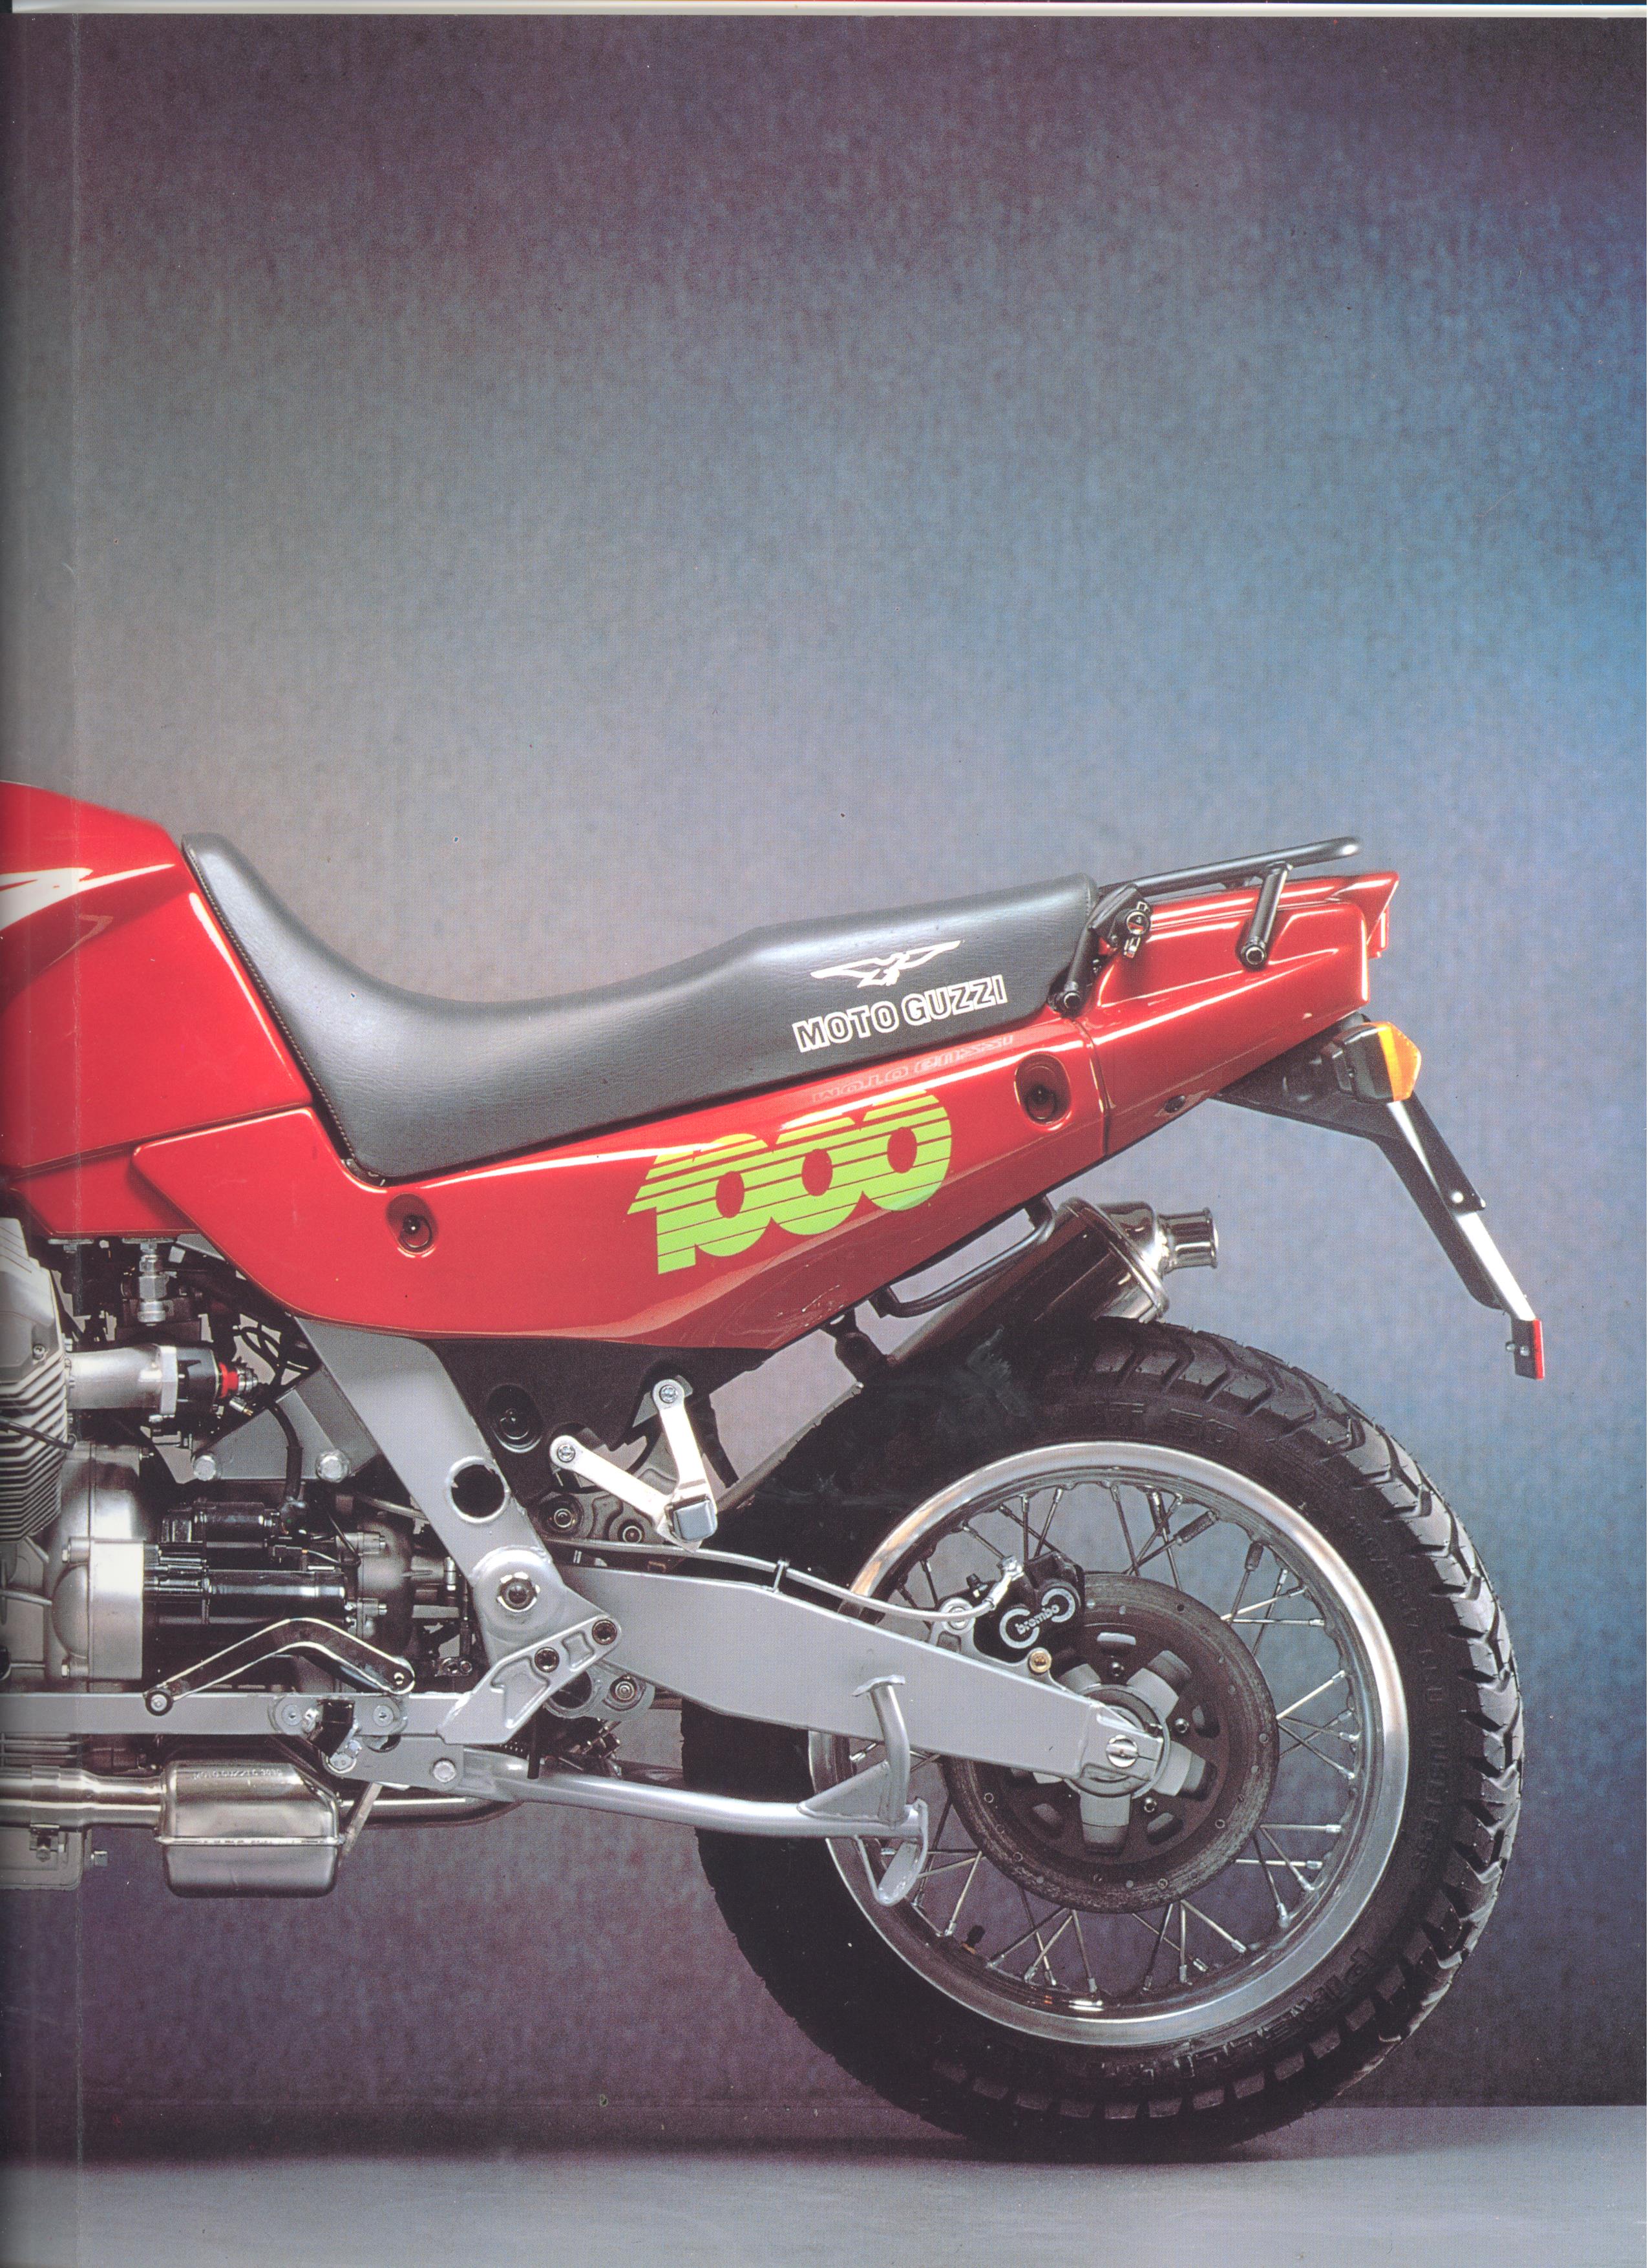 Moto Guzzi factory brochure: Quota 1000